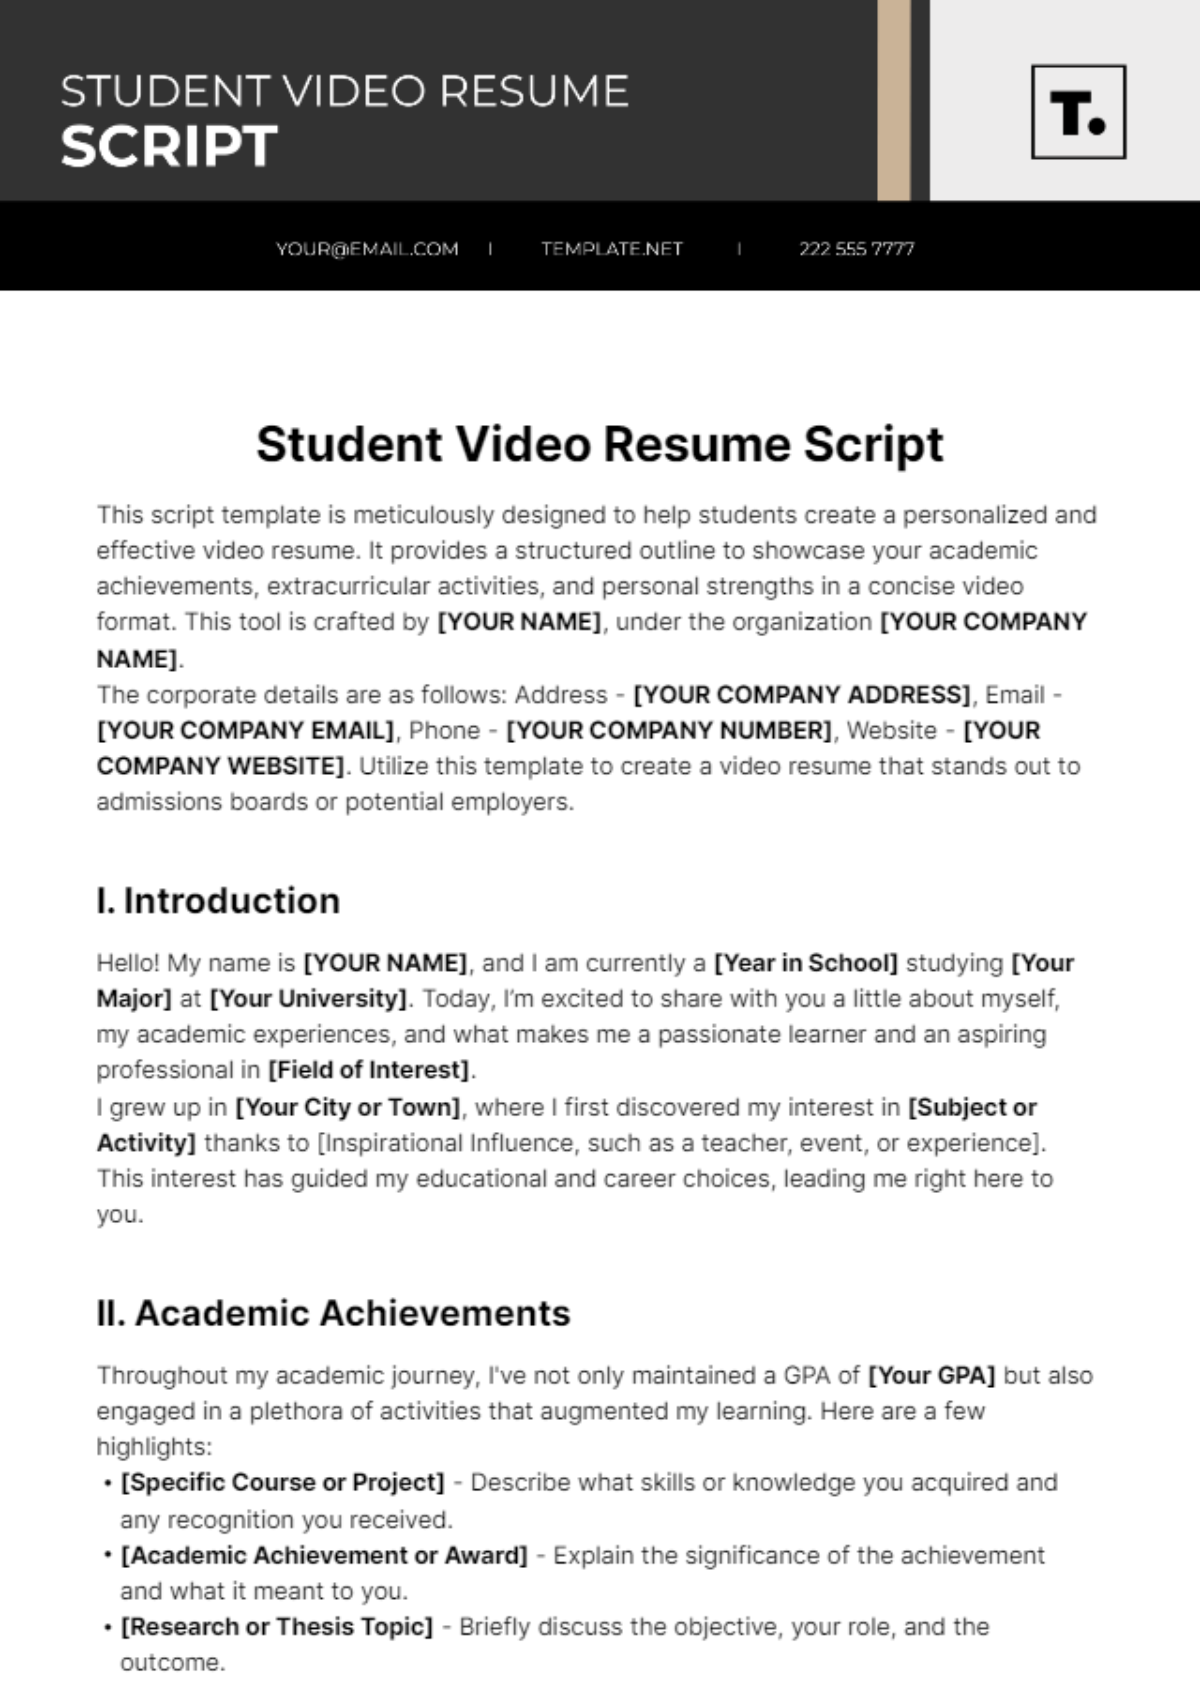 Student Video Resume Script Template